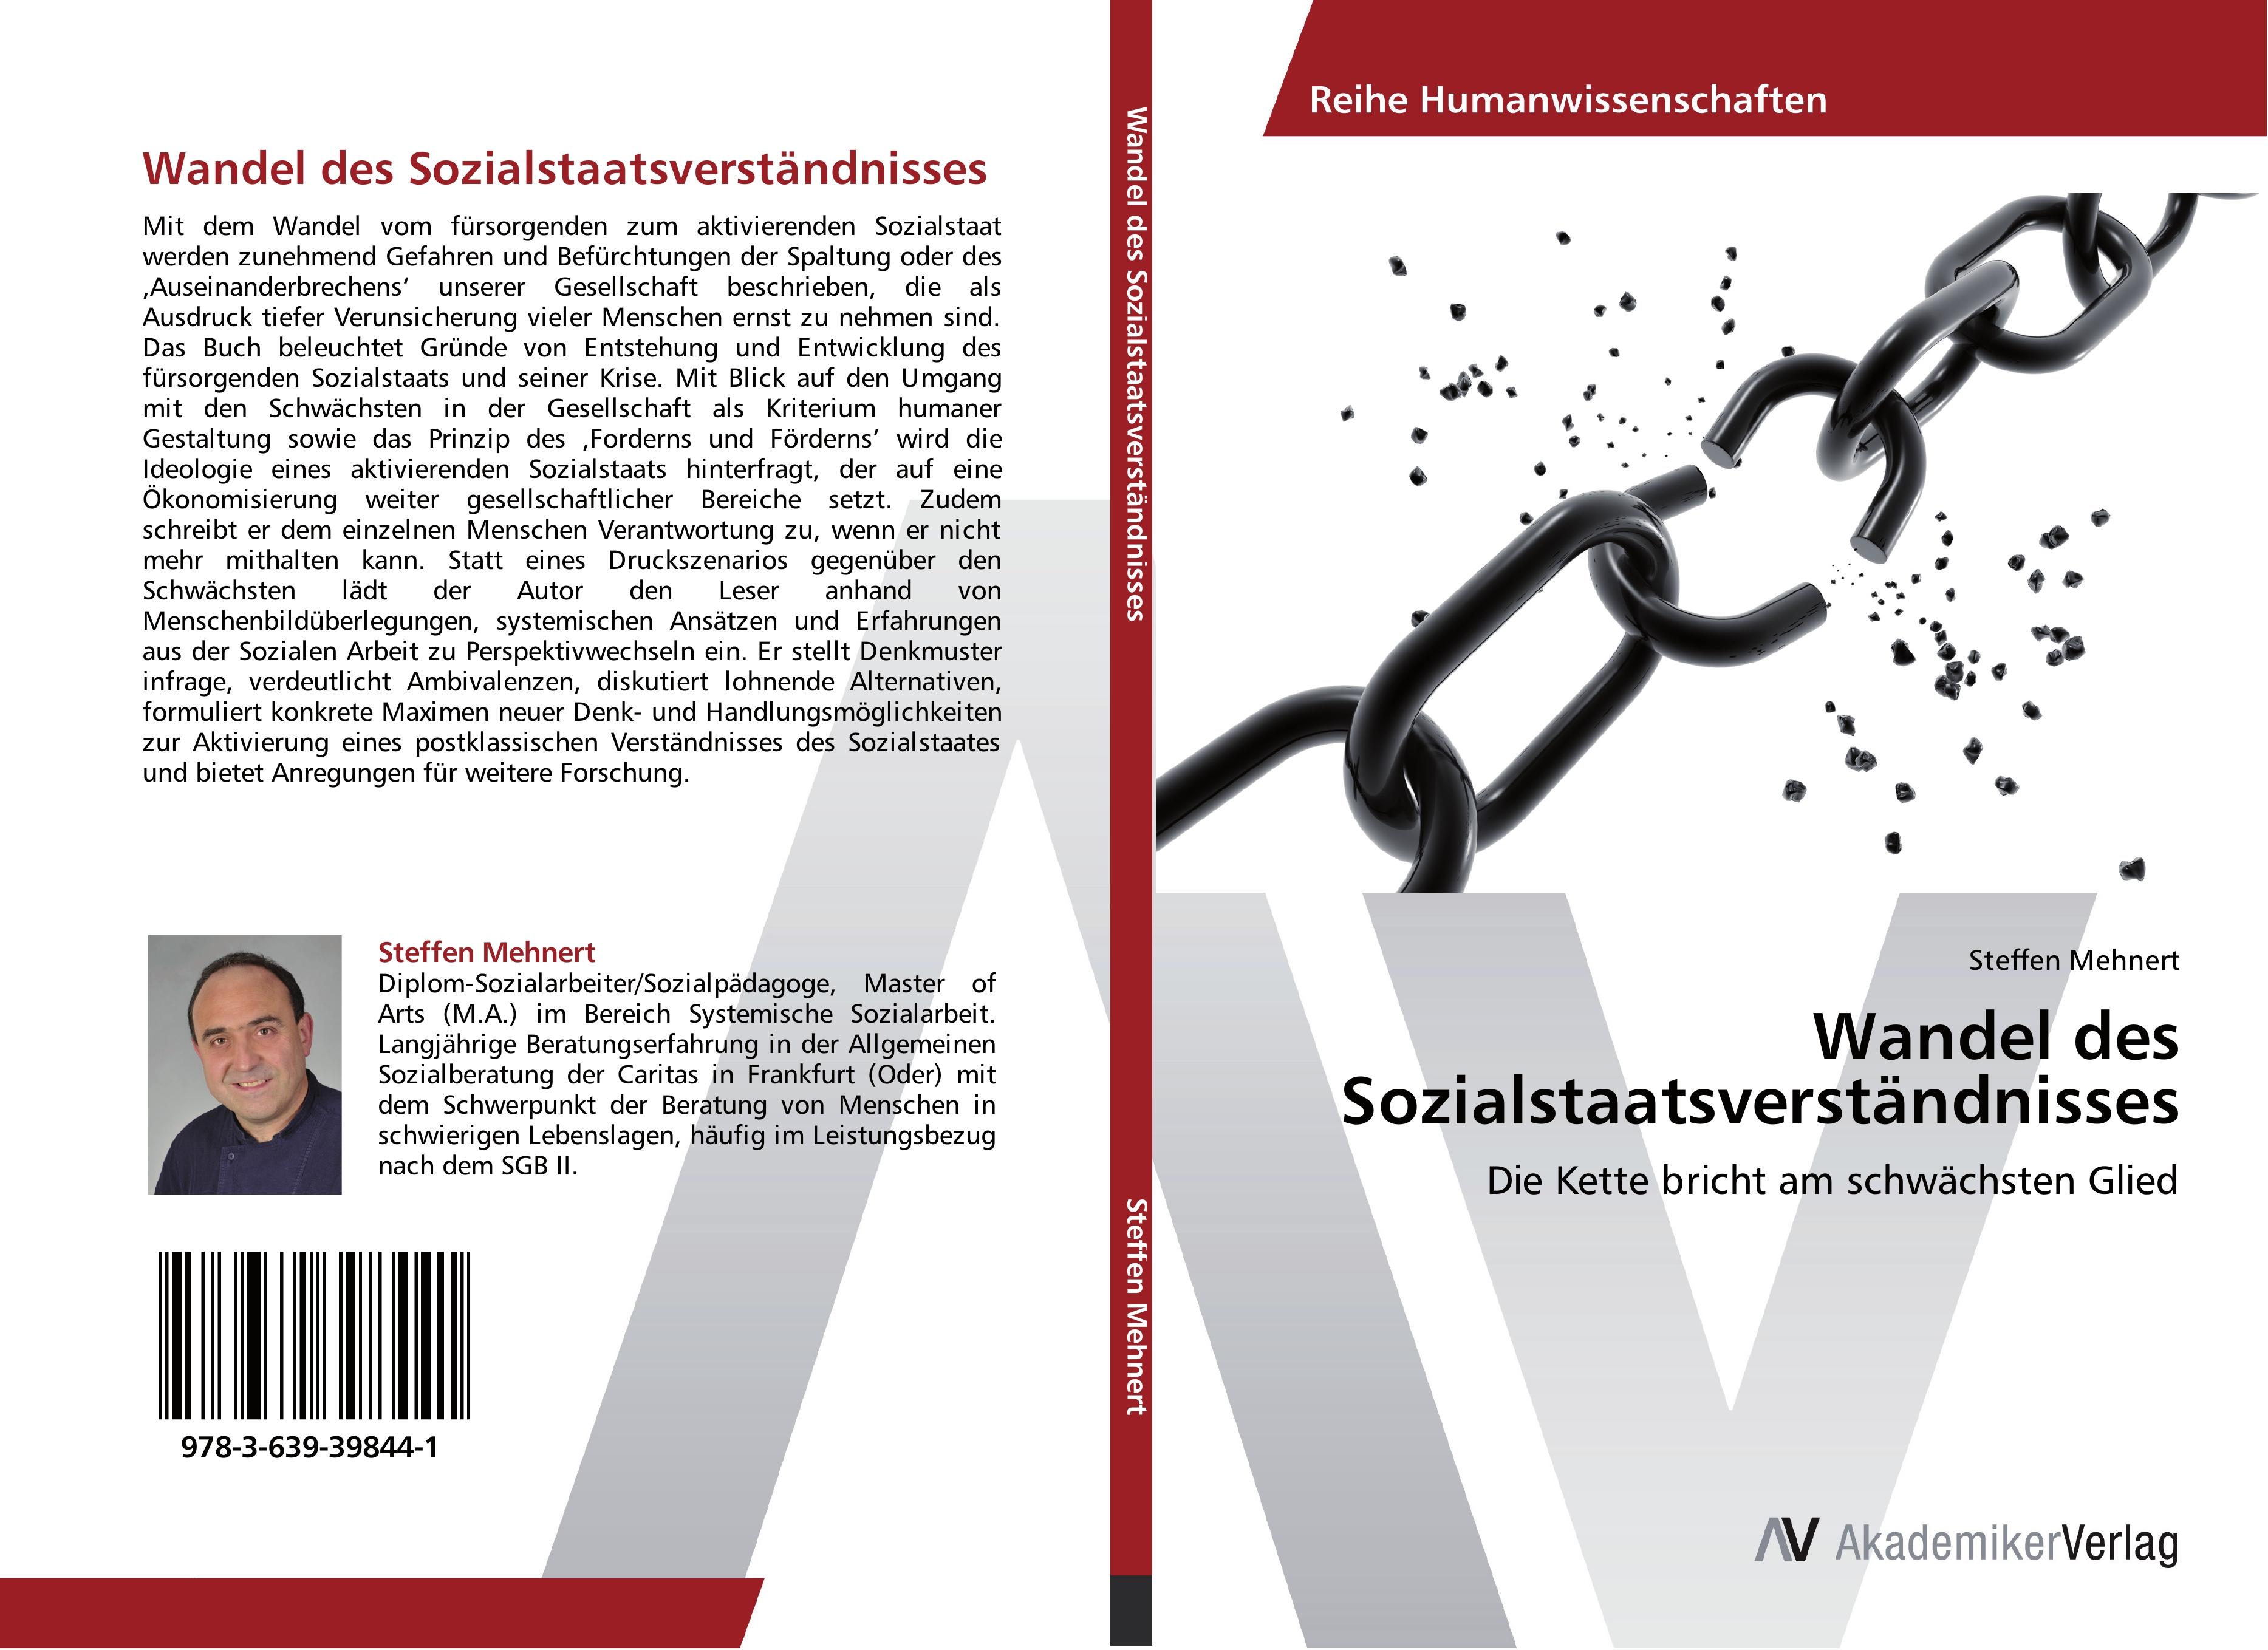 Wandel des Sozialstaatsverstaendnisses - Steffen Mehnert